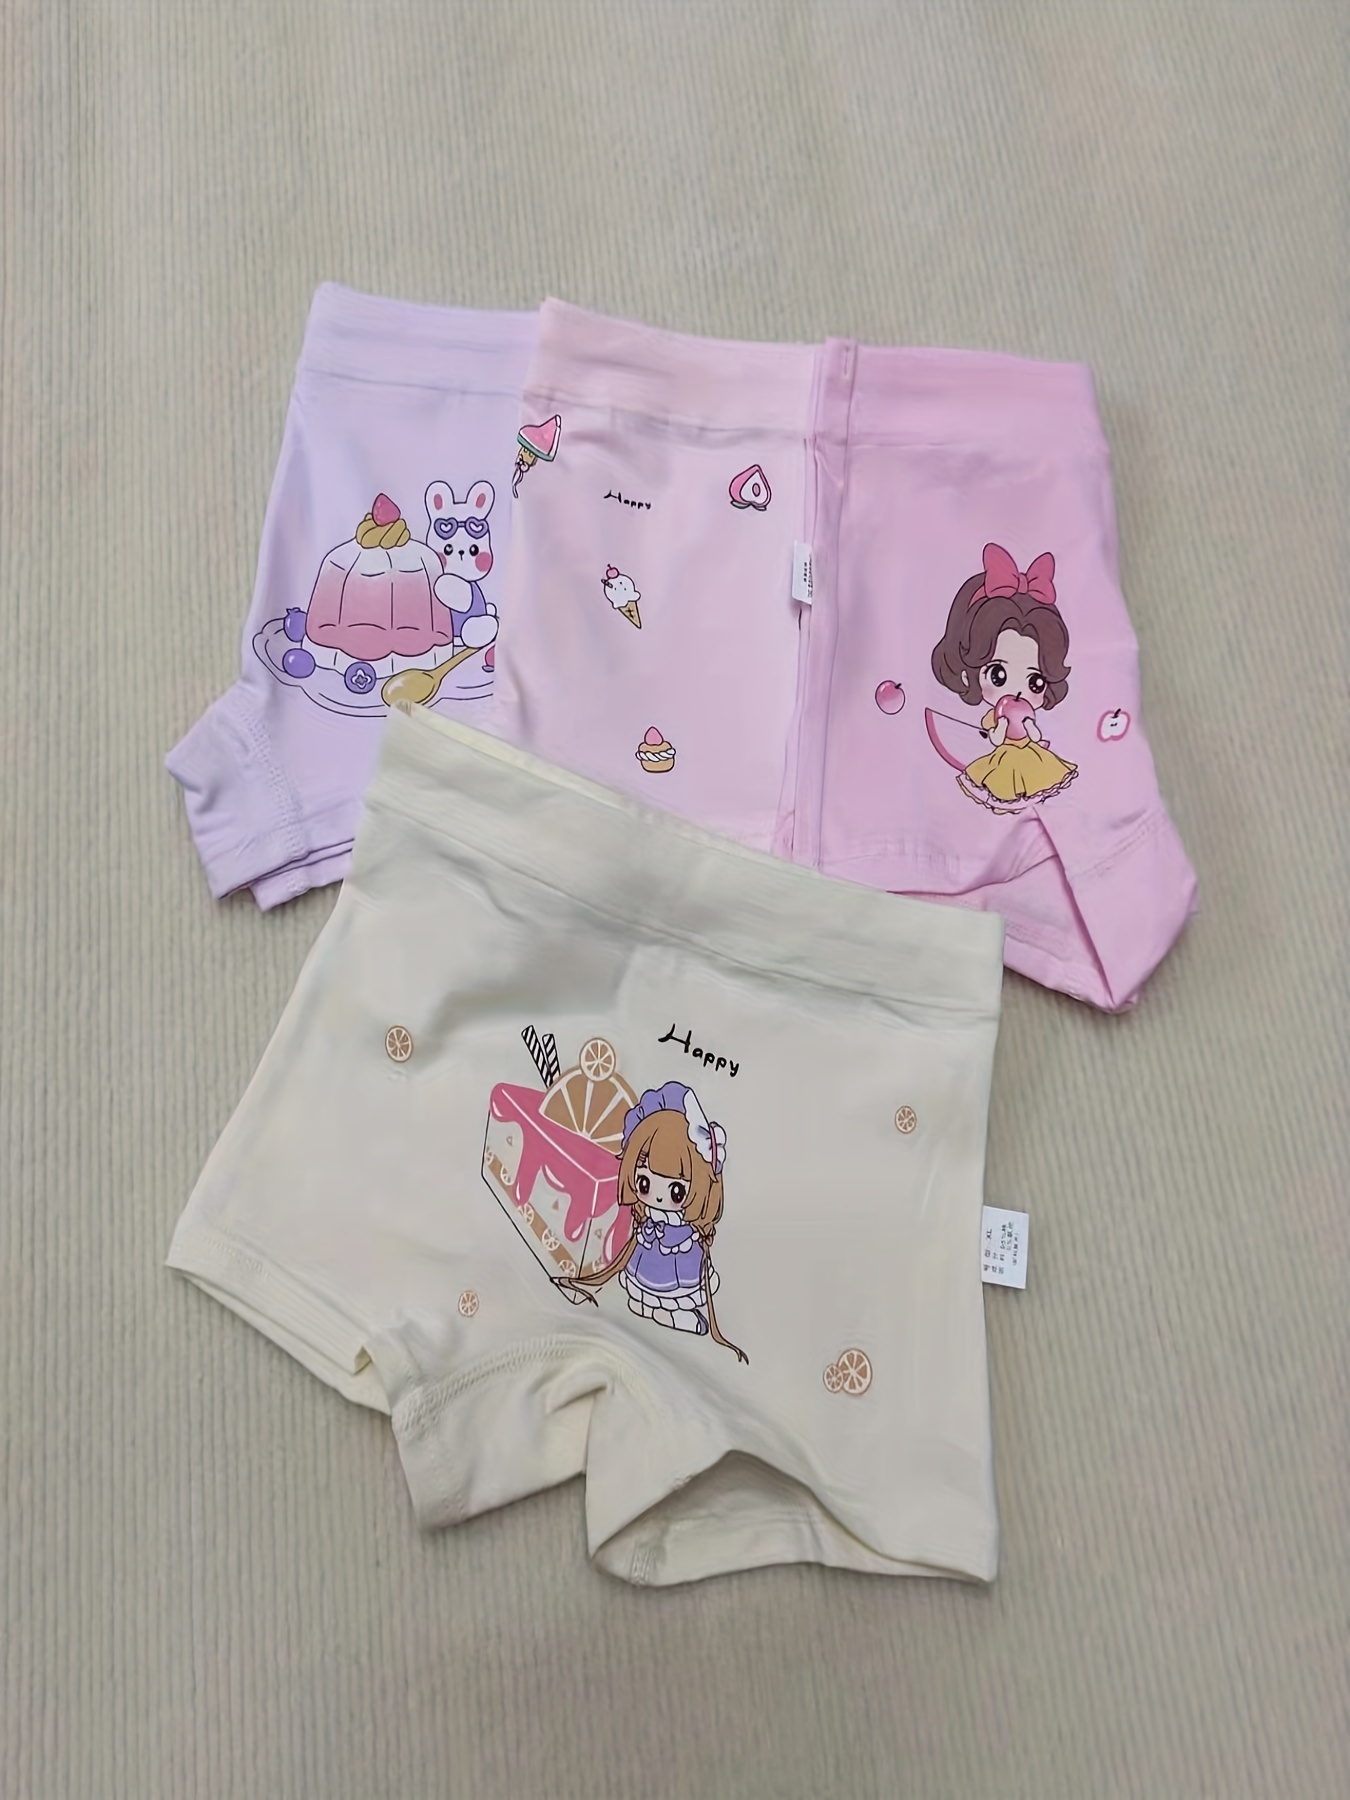 Underwear Anime Girl Small Poster